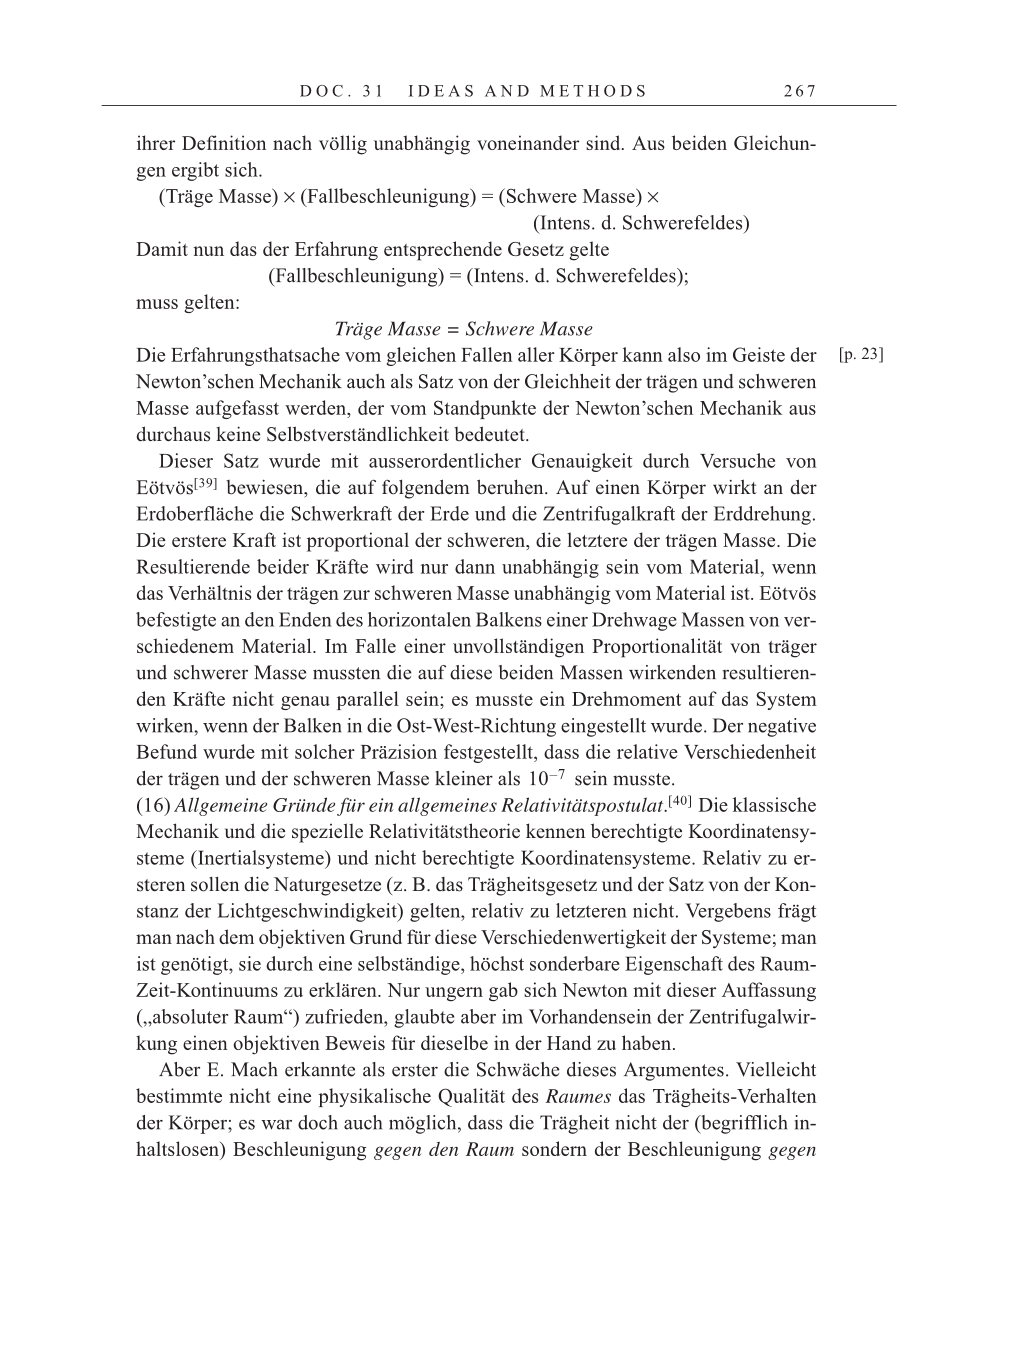 Volume 7: The Berlin Years: Writings, 1918-1921 page 267